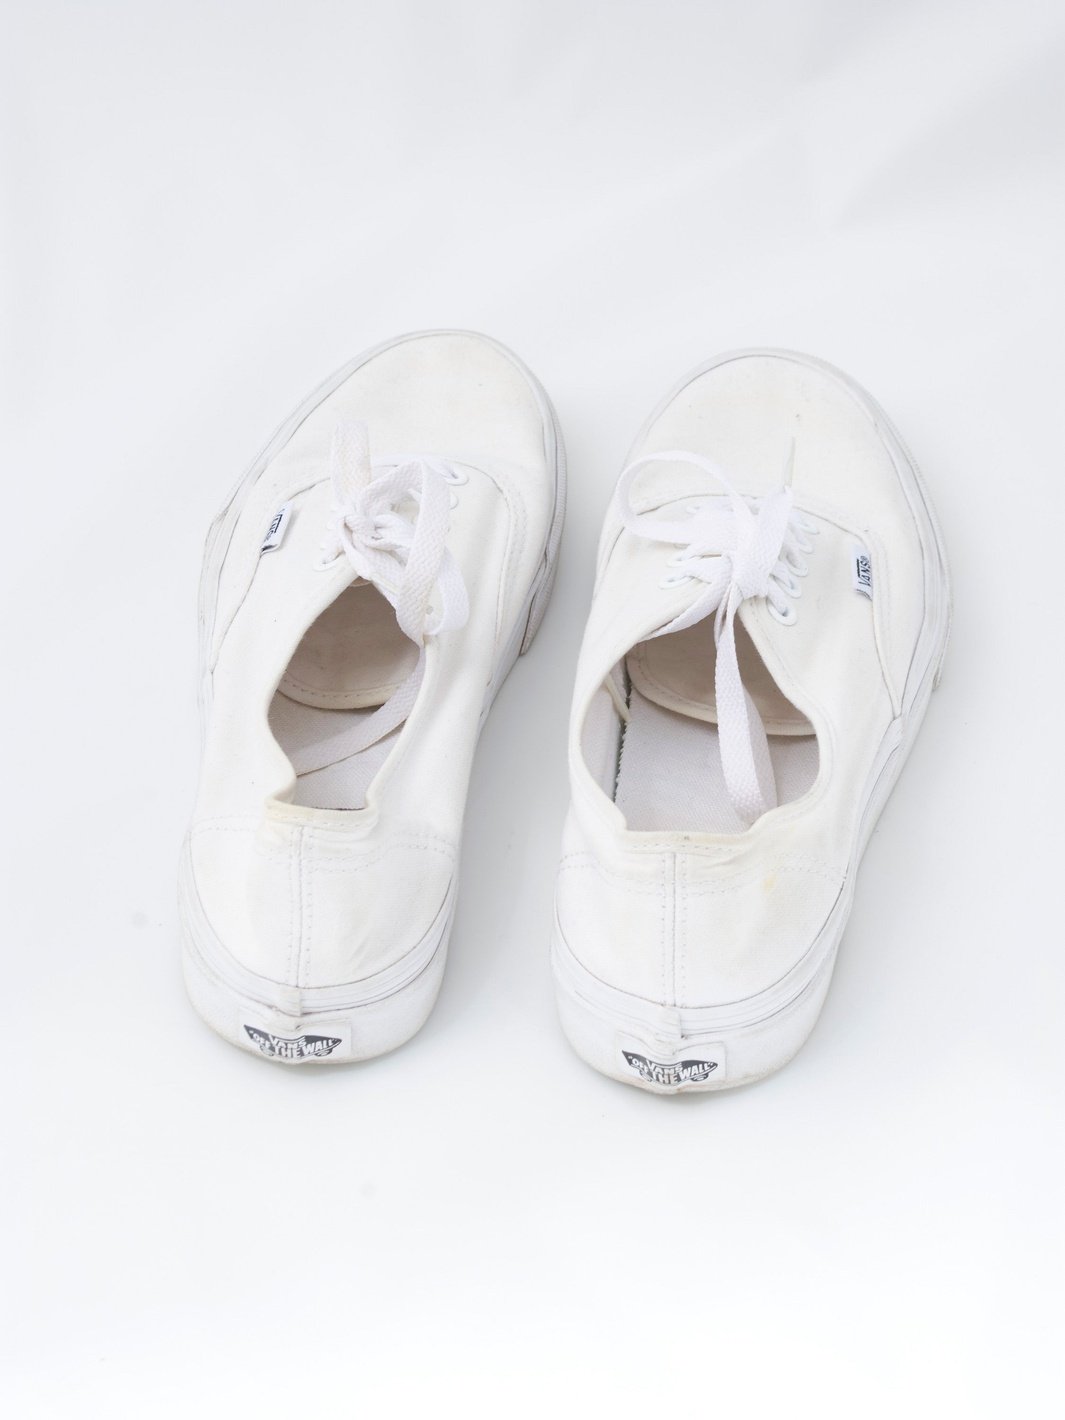 2010 Vans white canvas sneakers